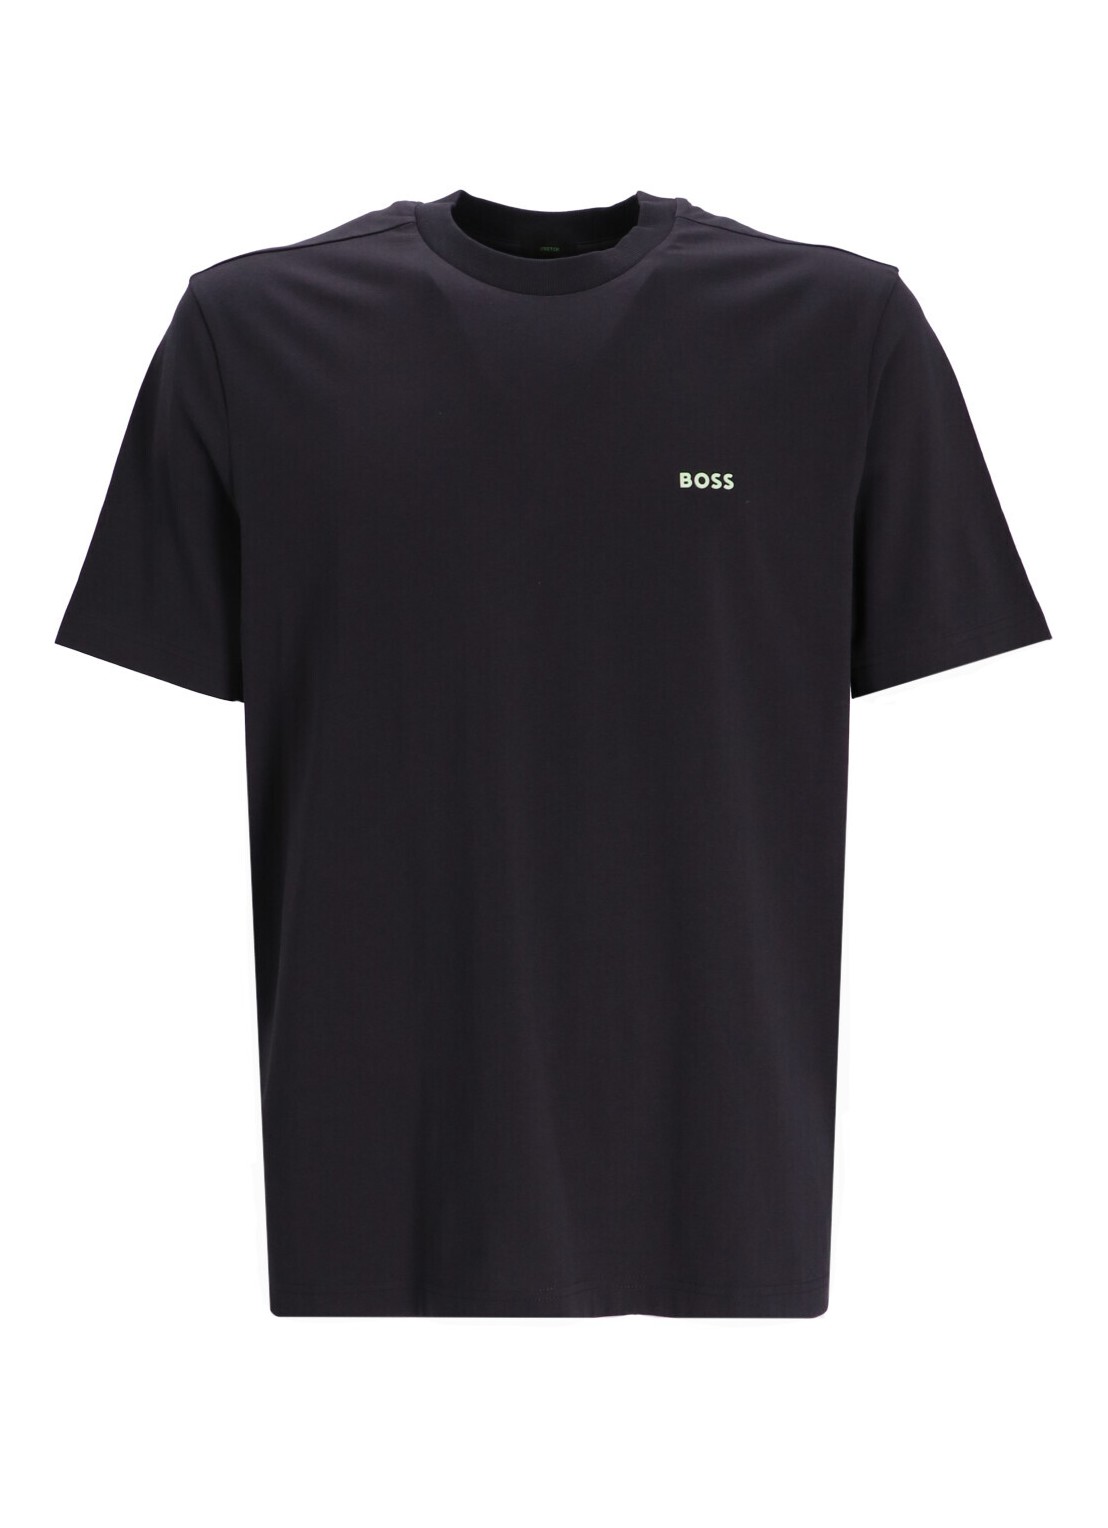 Camiseta boss t-shirt mantee - 50506373 016 talla XXL
 